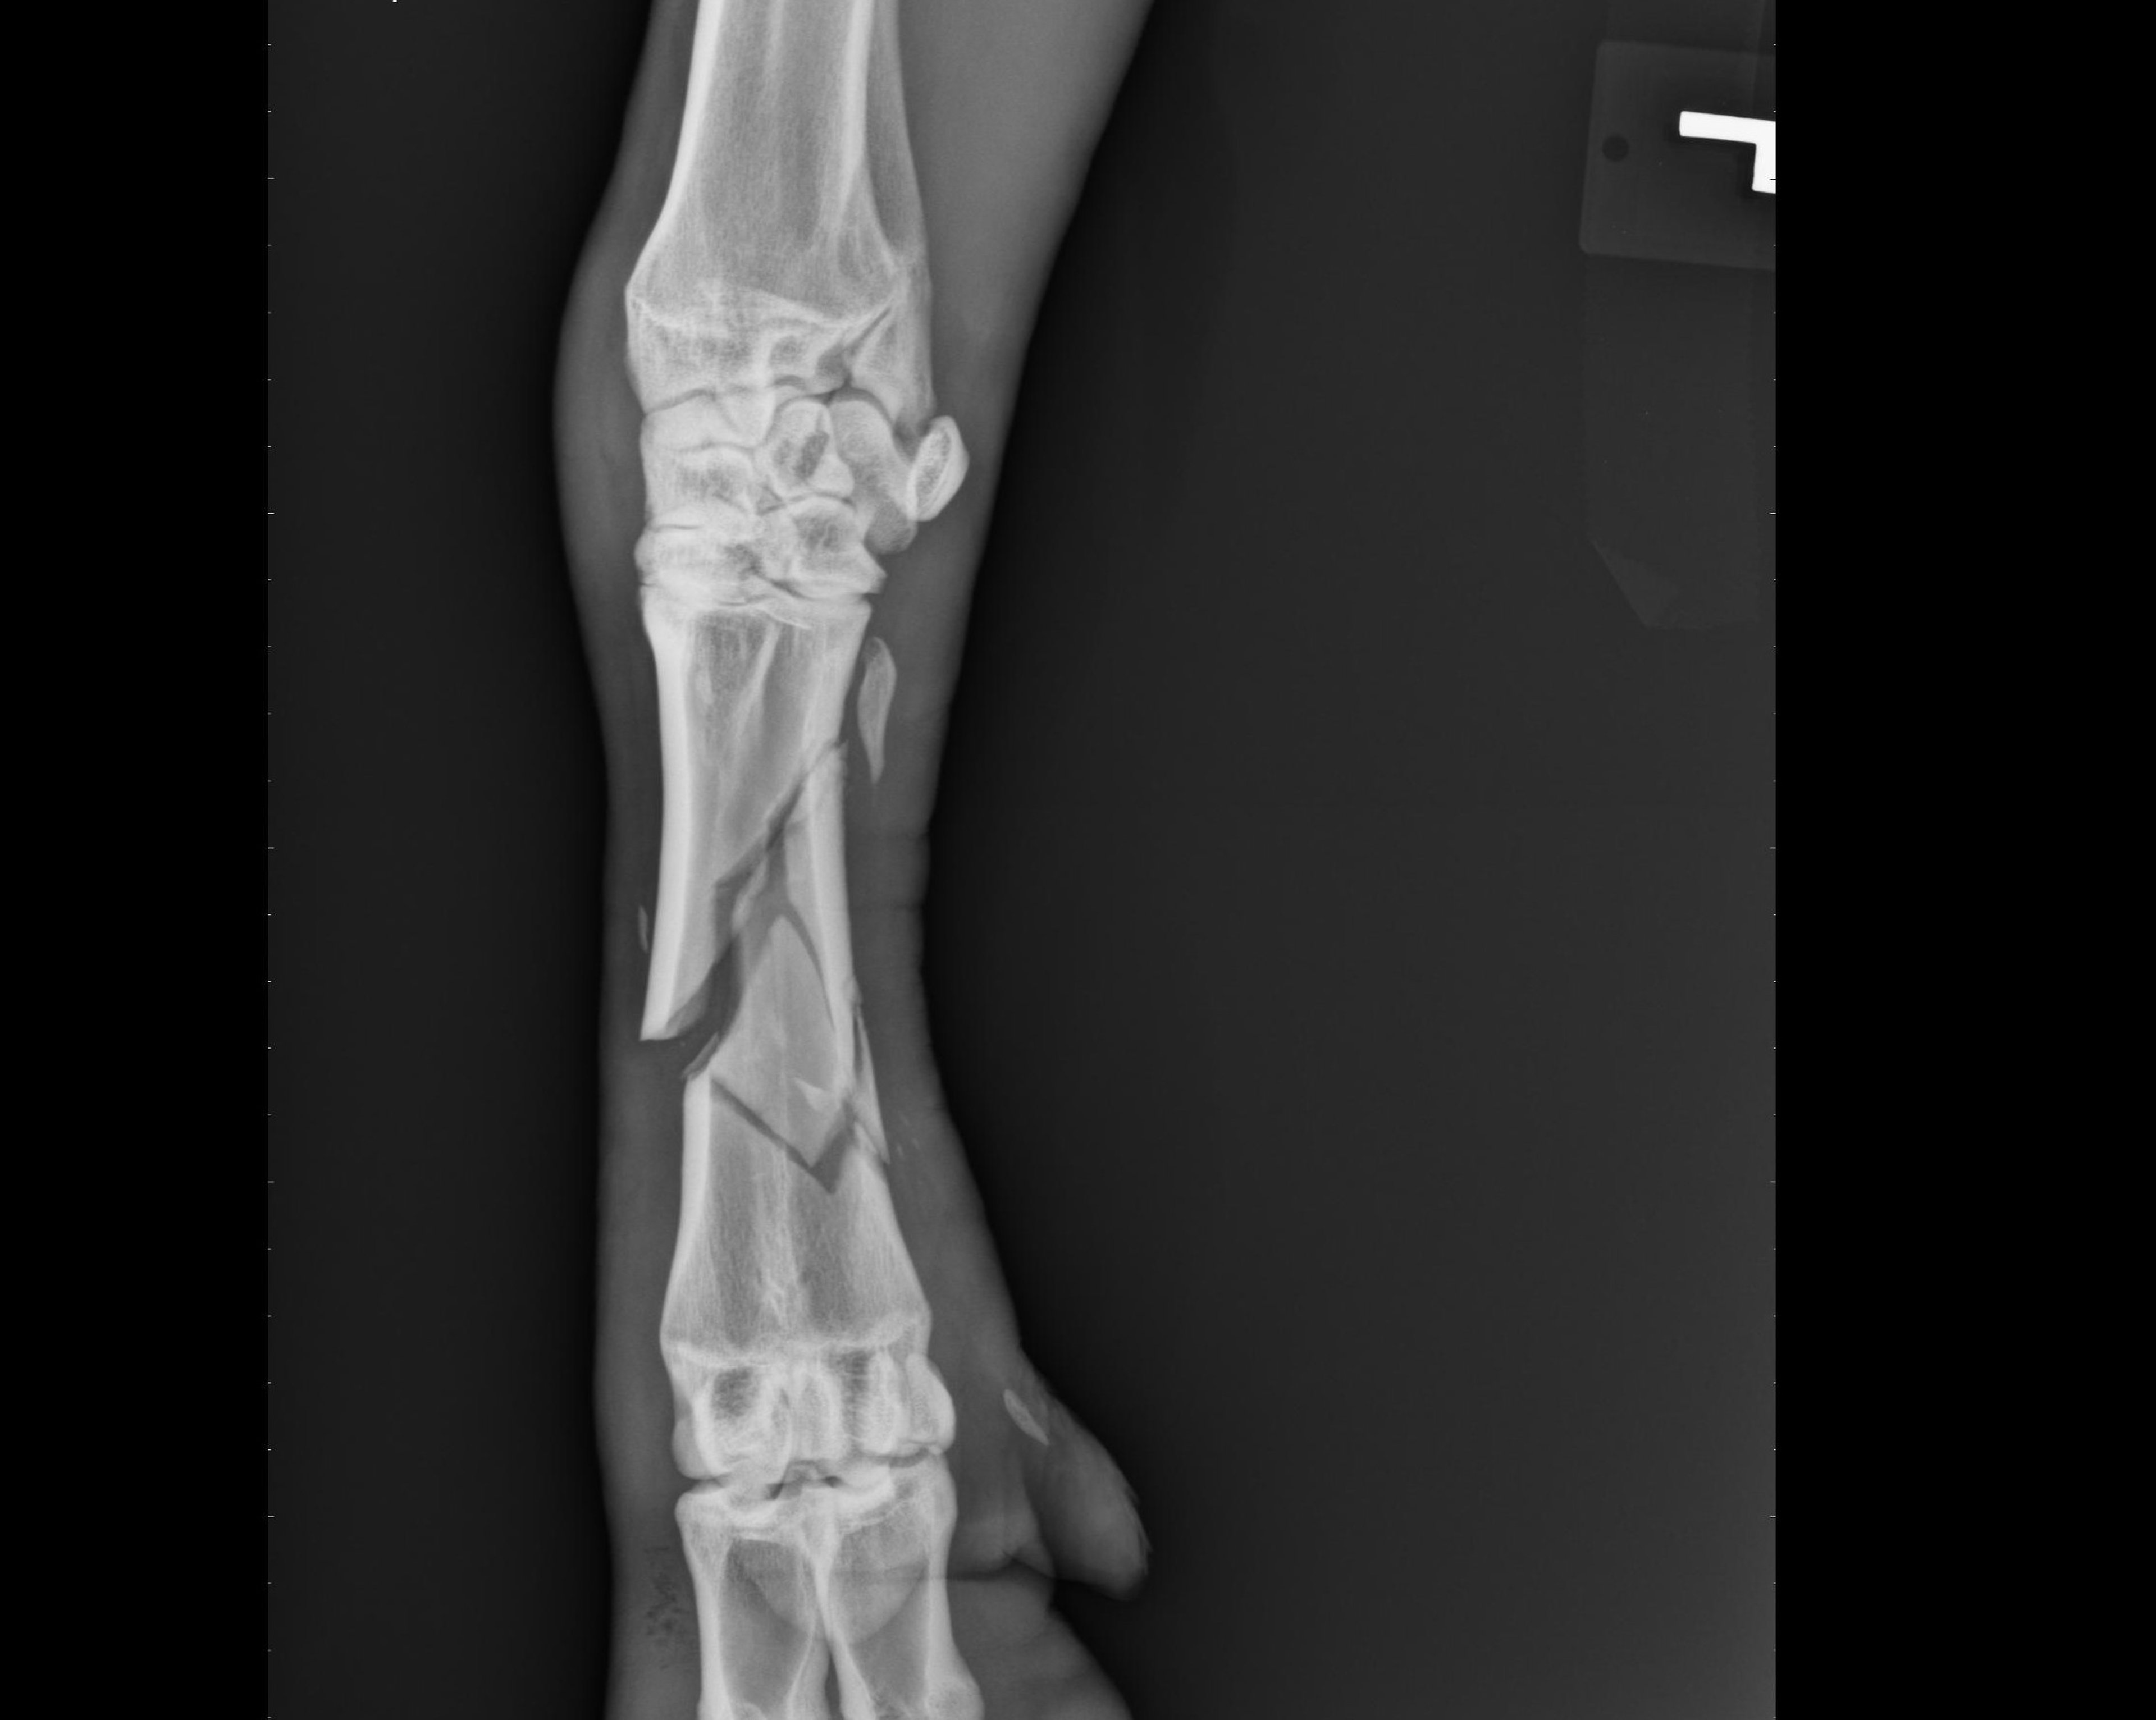 Metacarpal bone fracture, goat